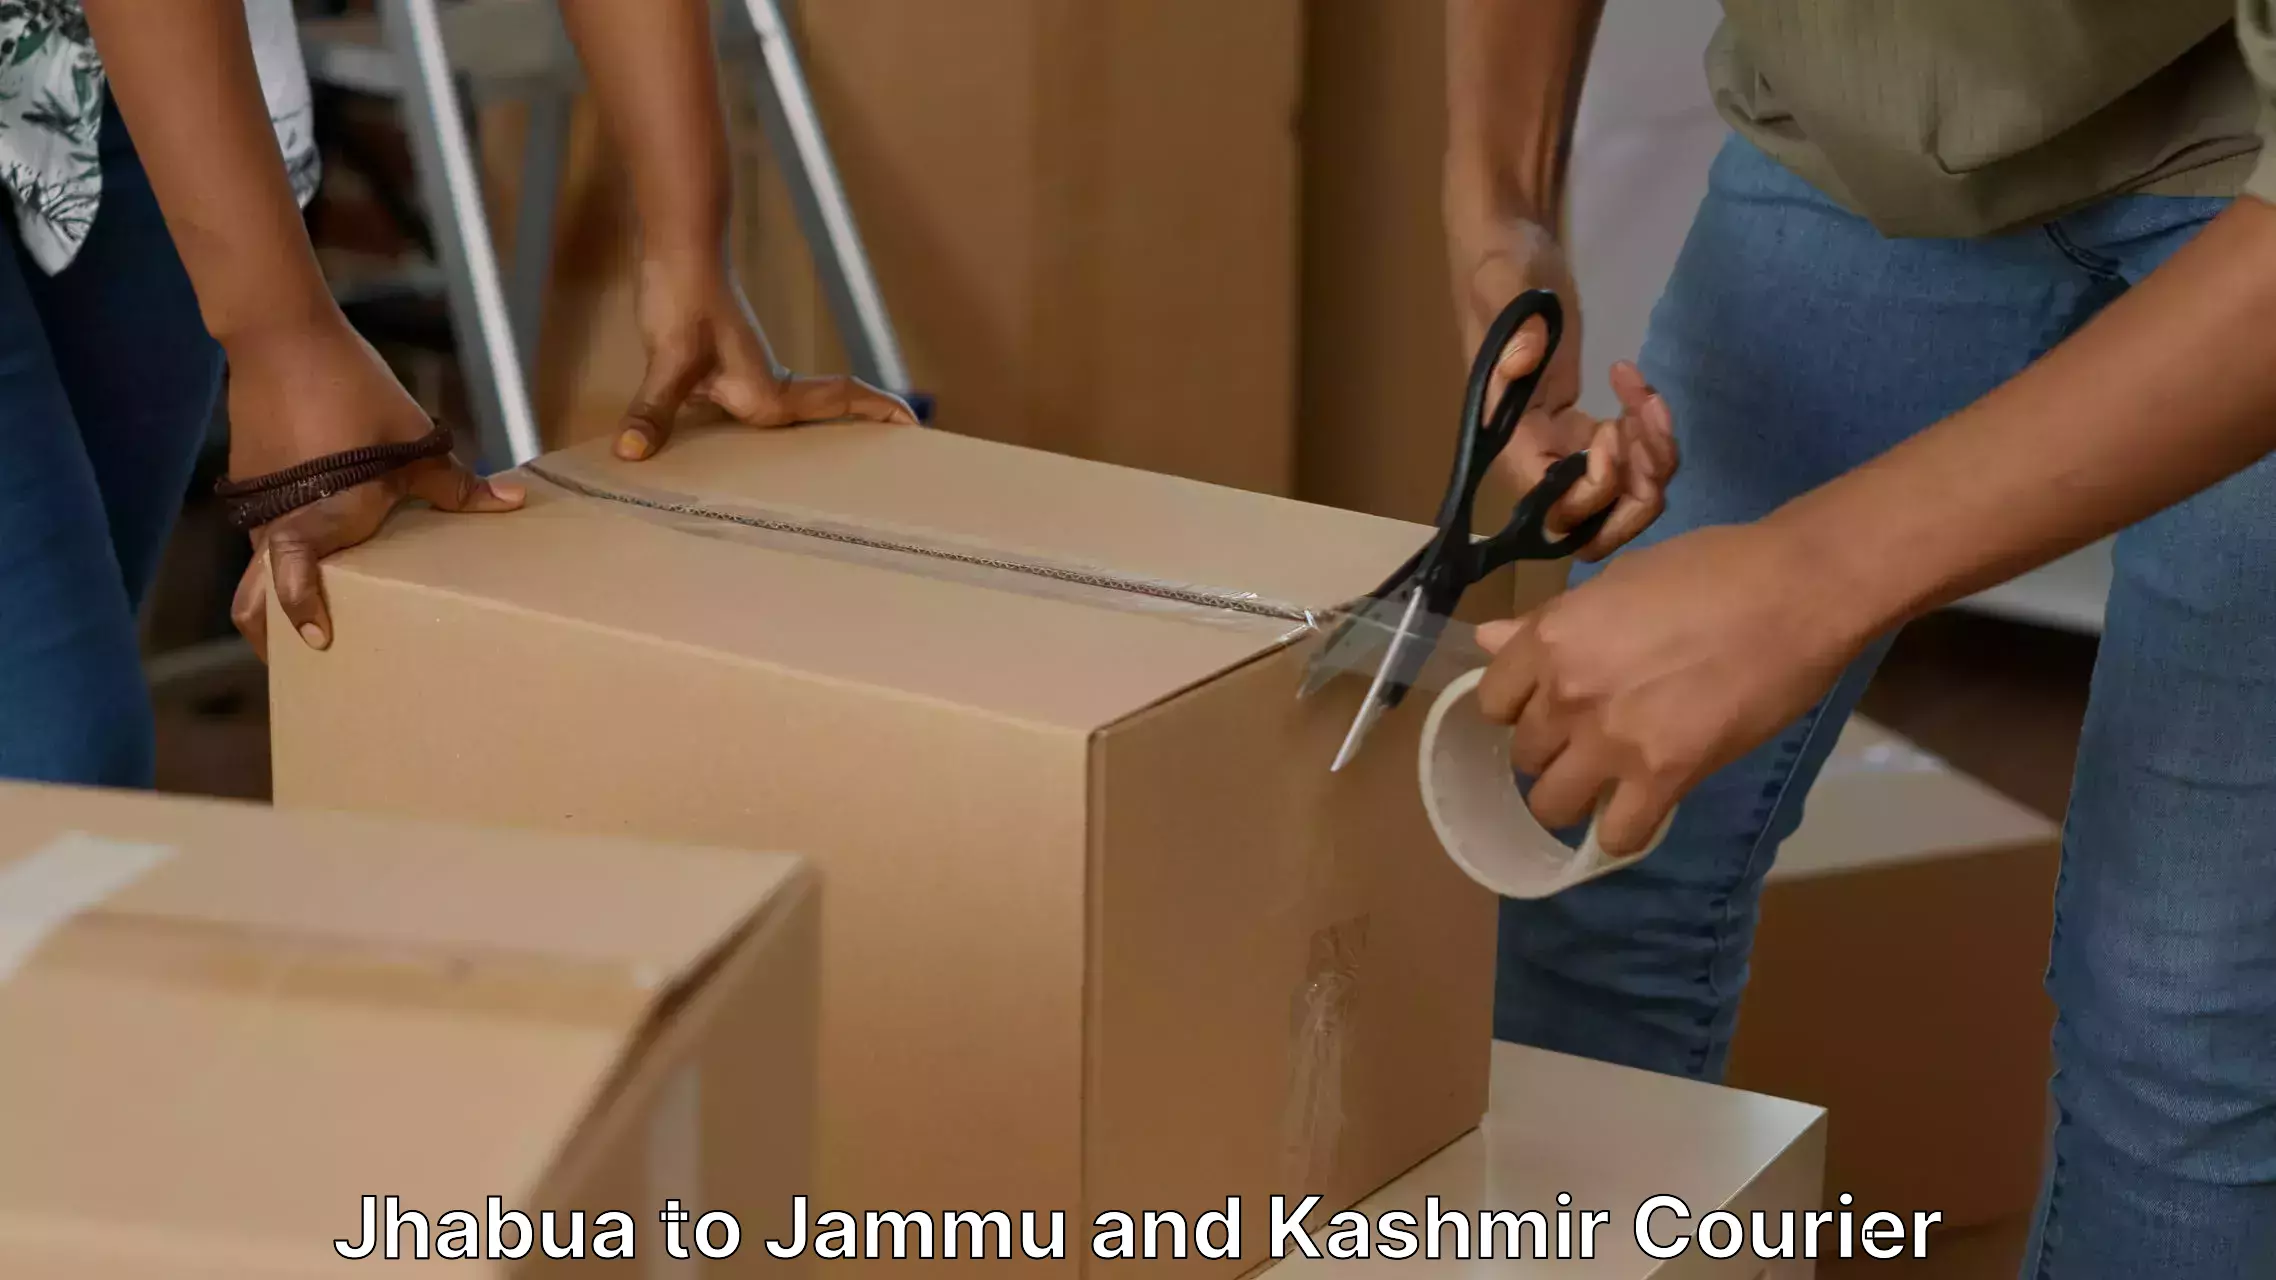 Furniture delivery service Jhabua to Pulwama